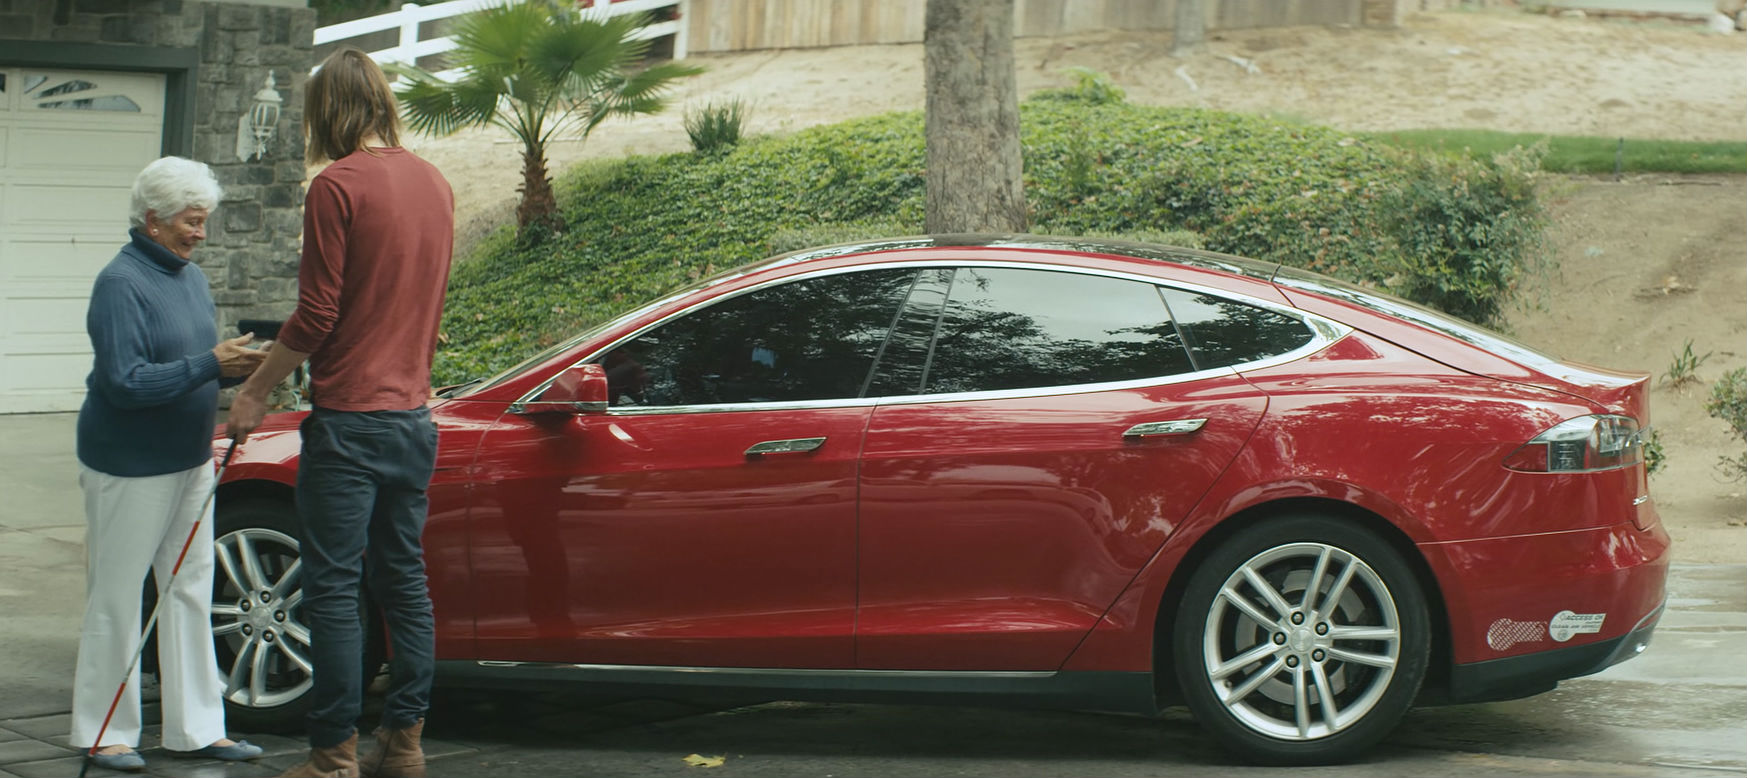 Tesla short film gives emotional glimpse at Full Self-Driving future